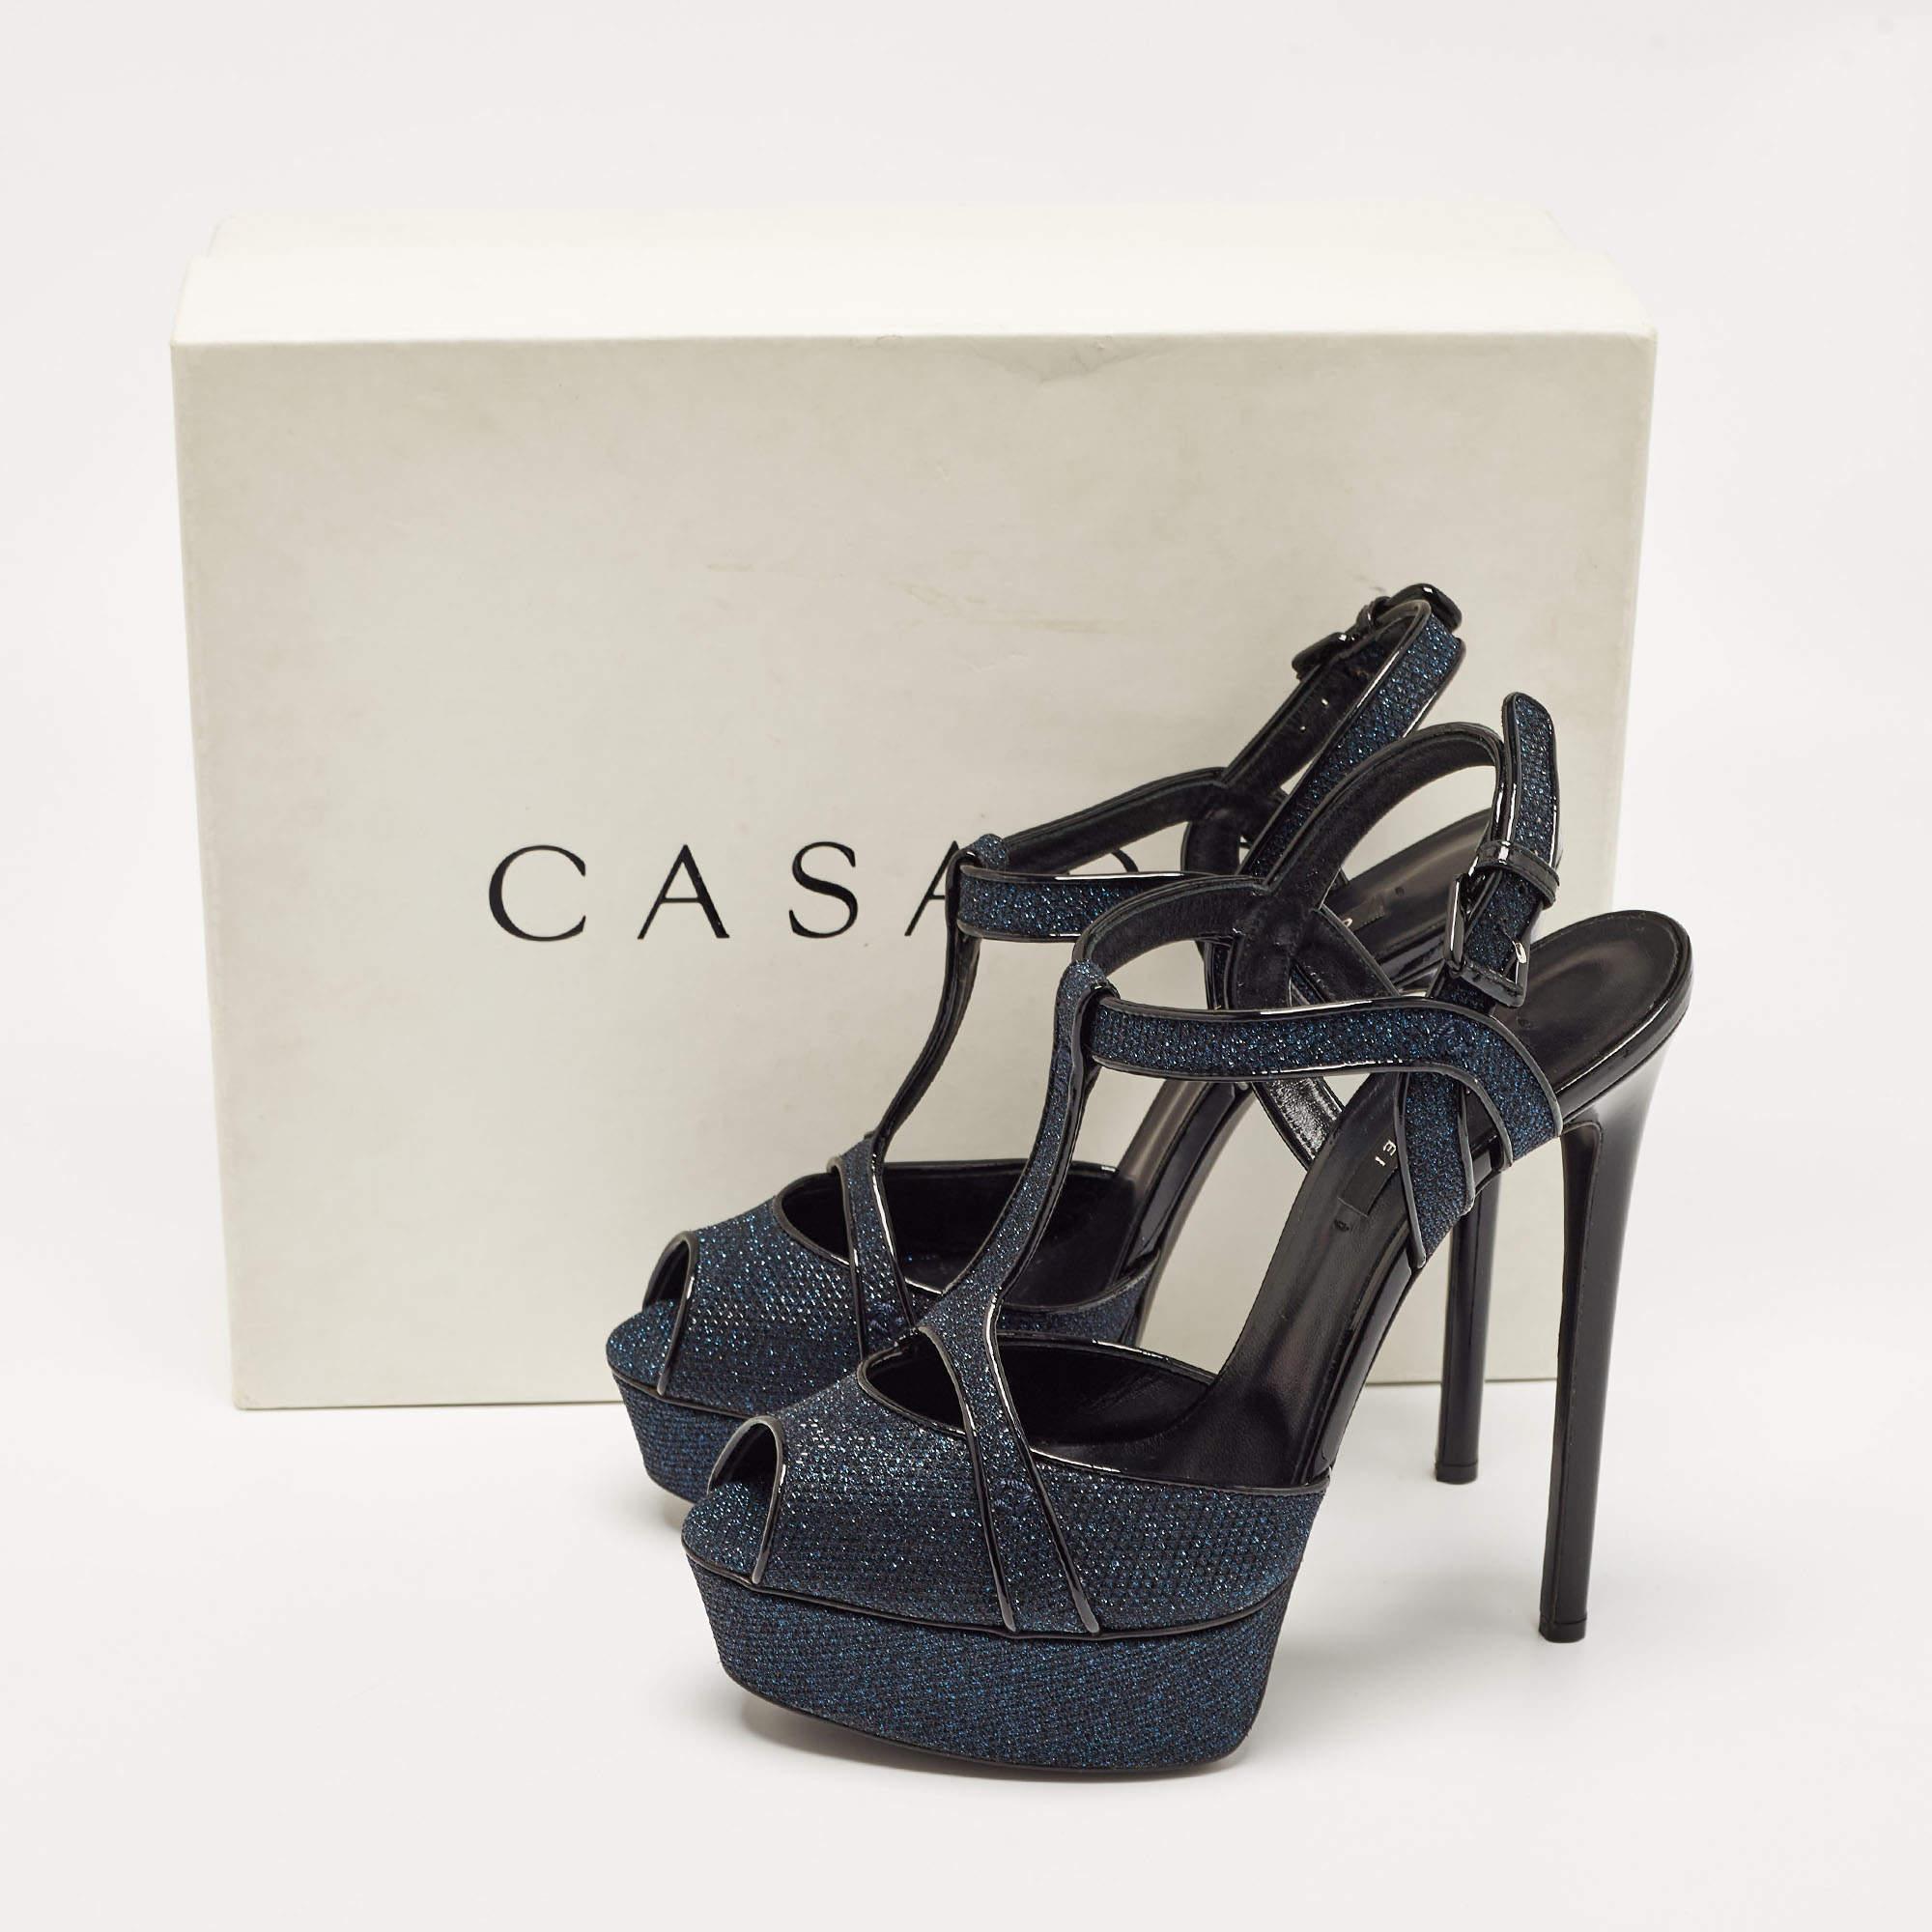 Casadei Navy Blue/Black Glitter and Patent Leather Platform Sandals Size 40 For Sale 3